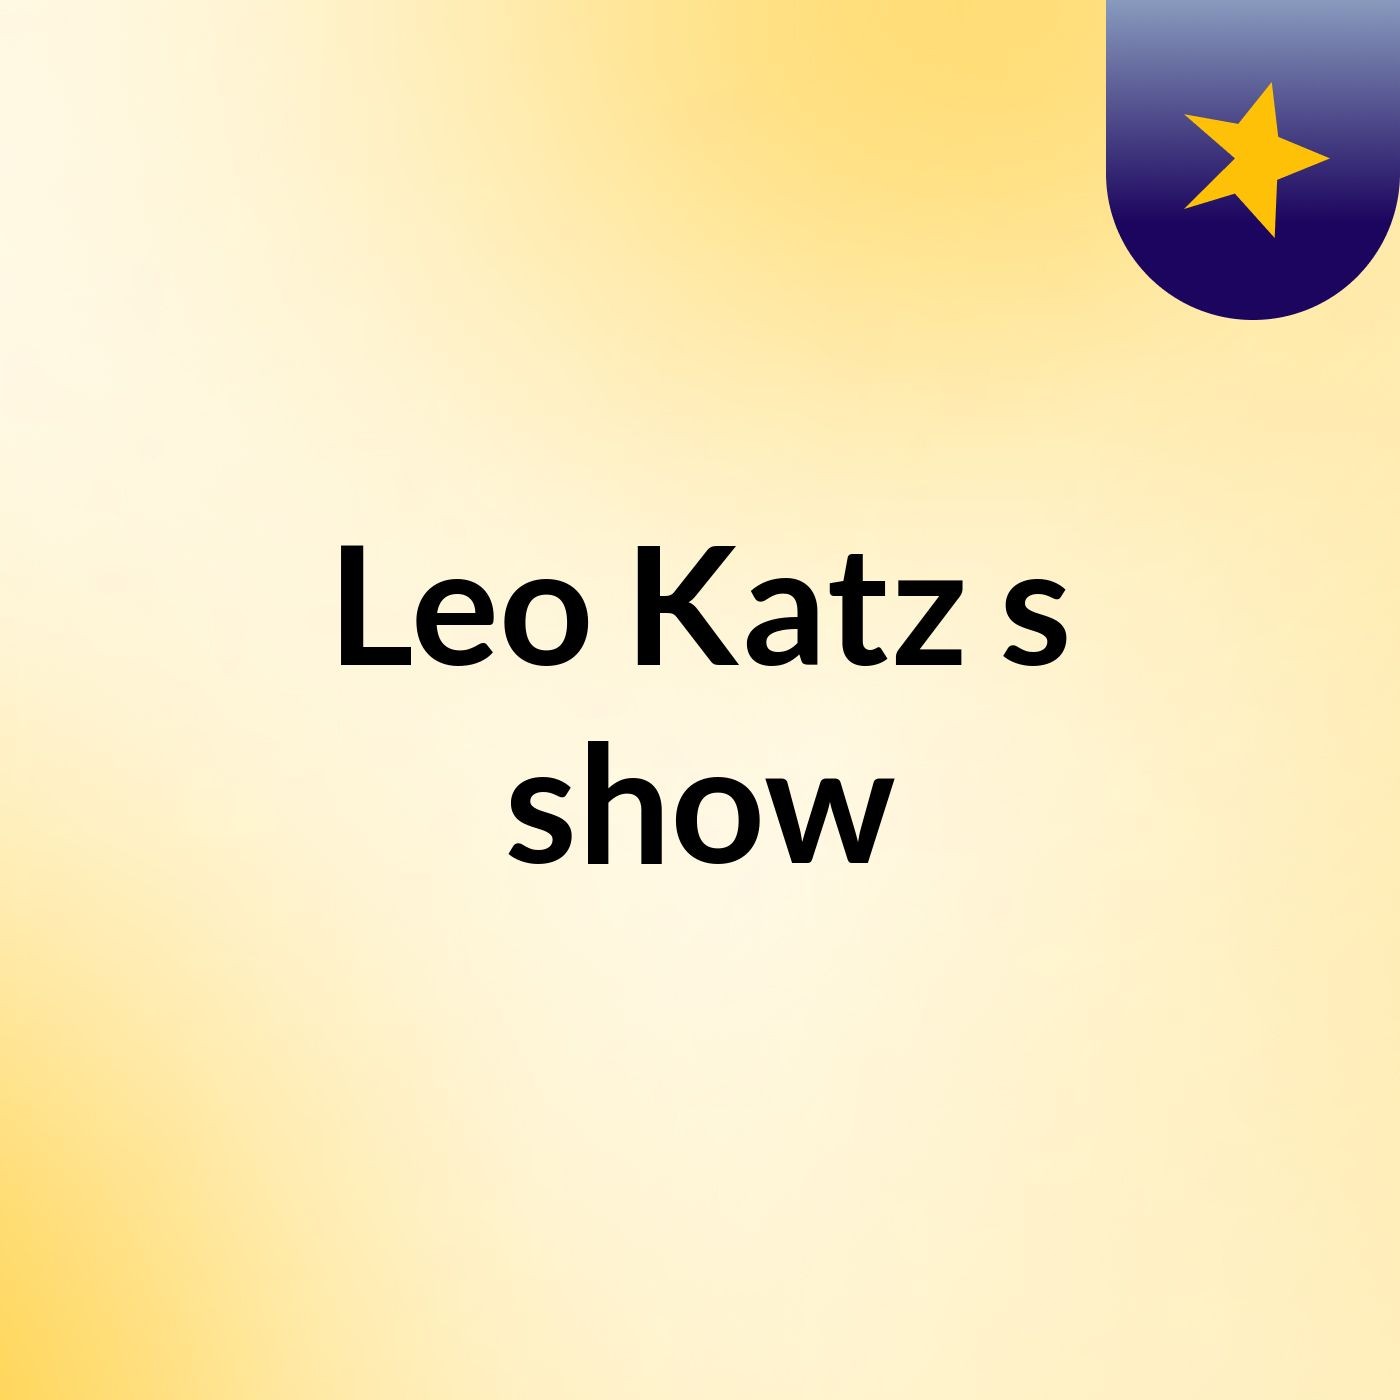 Leo Katz's show